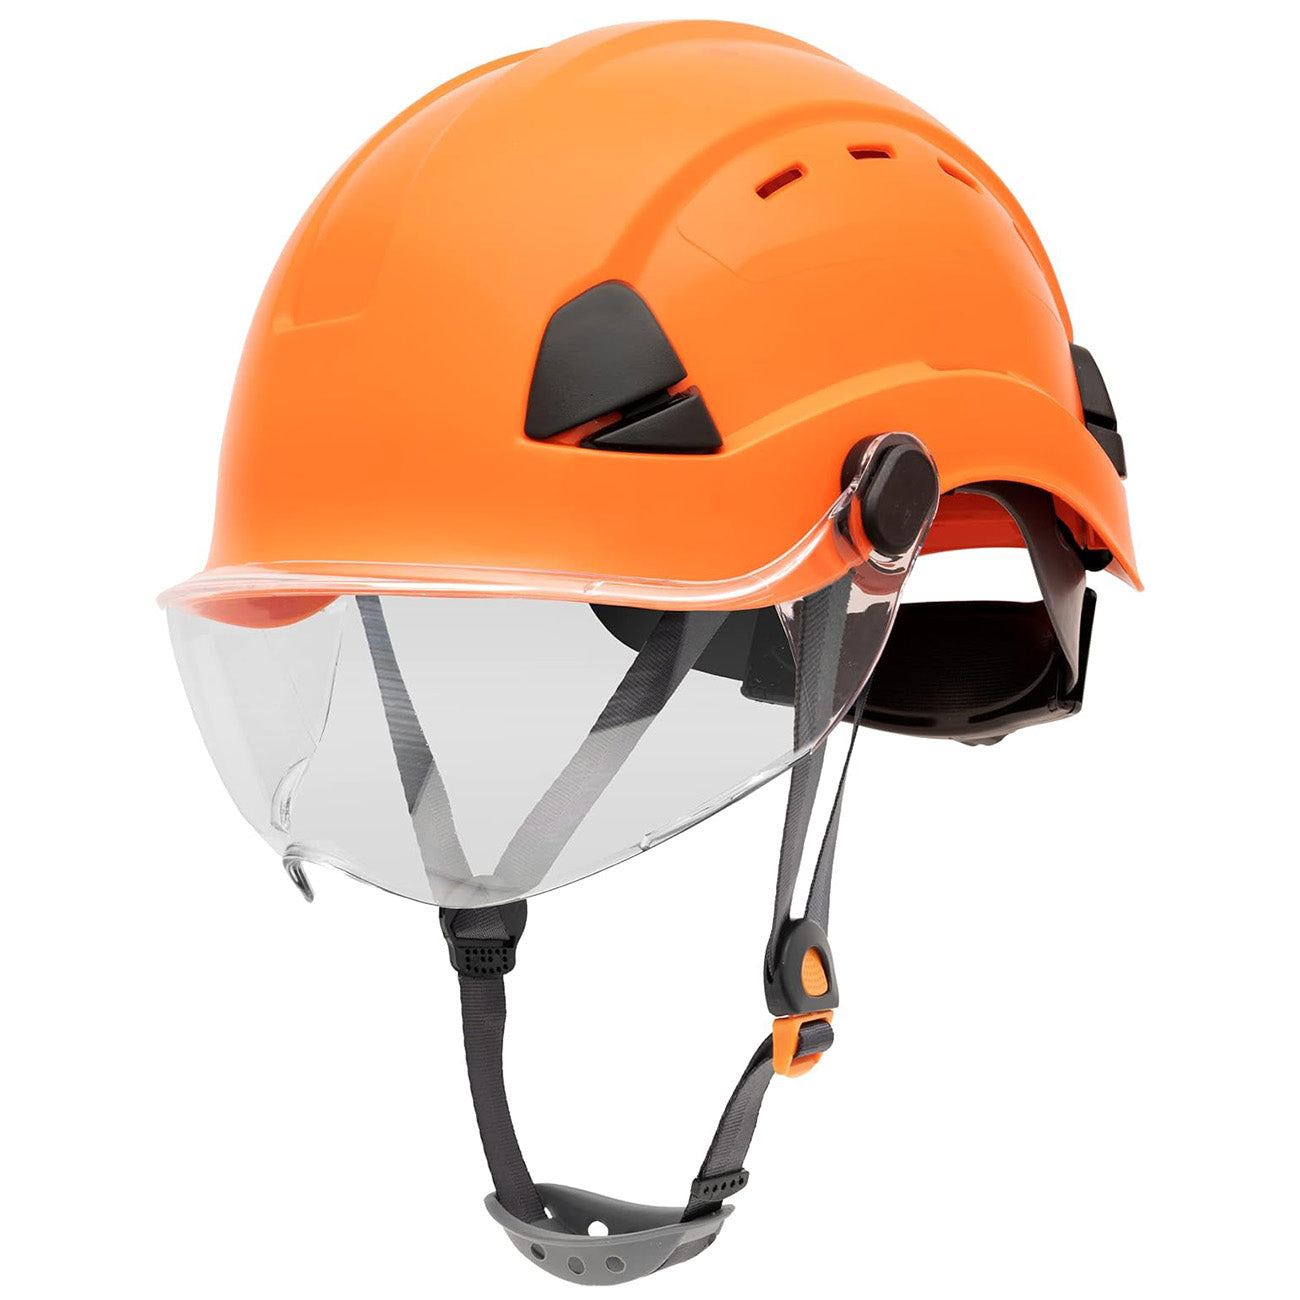 Honeywell Fibre Metal Safety Helmet Vented Orange